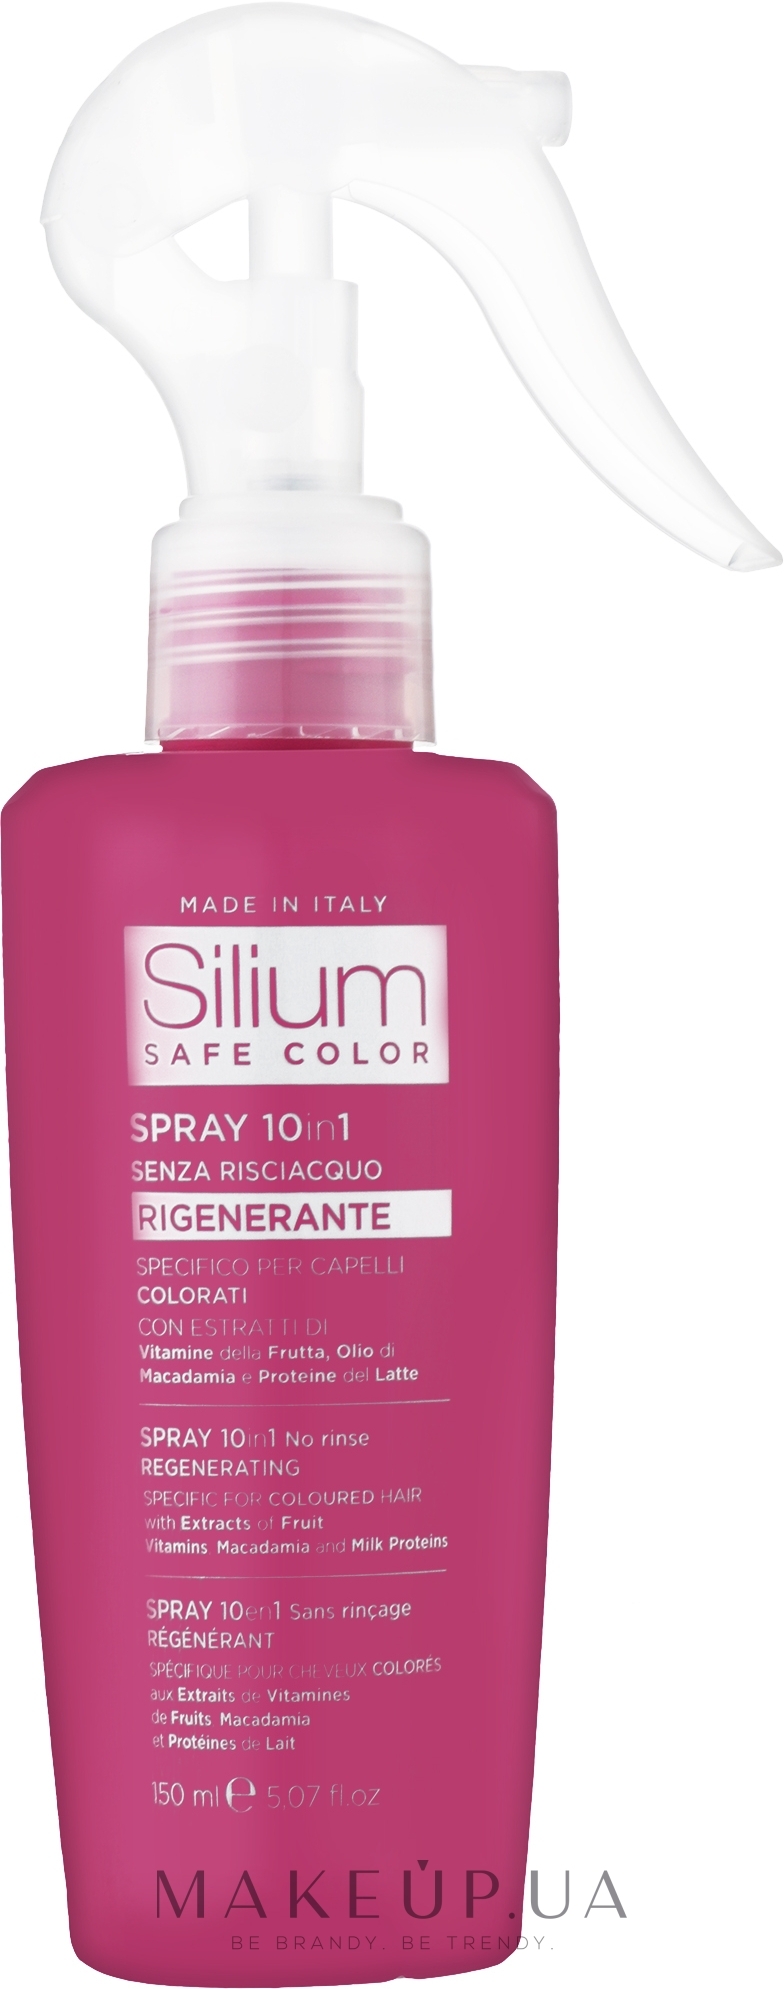 Спрей для збереження кольору фарбованого волосся «10 переваг у 1» - Silium Safe Color Spray Color Protector 10 Benefits in 1 — фото 150ml